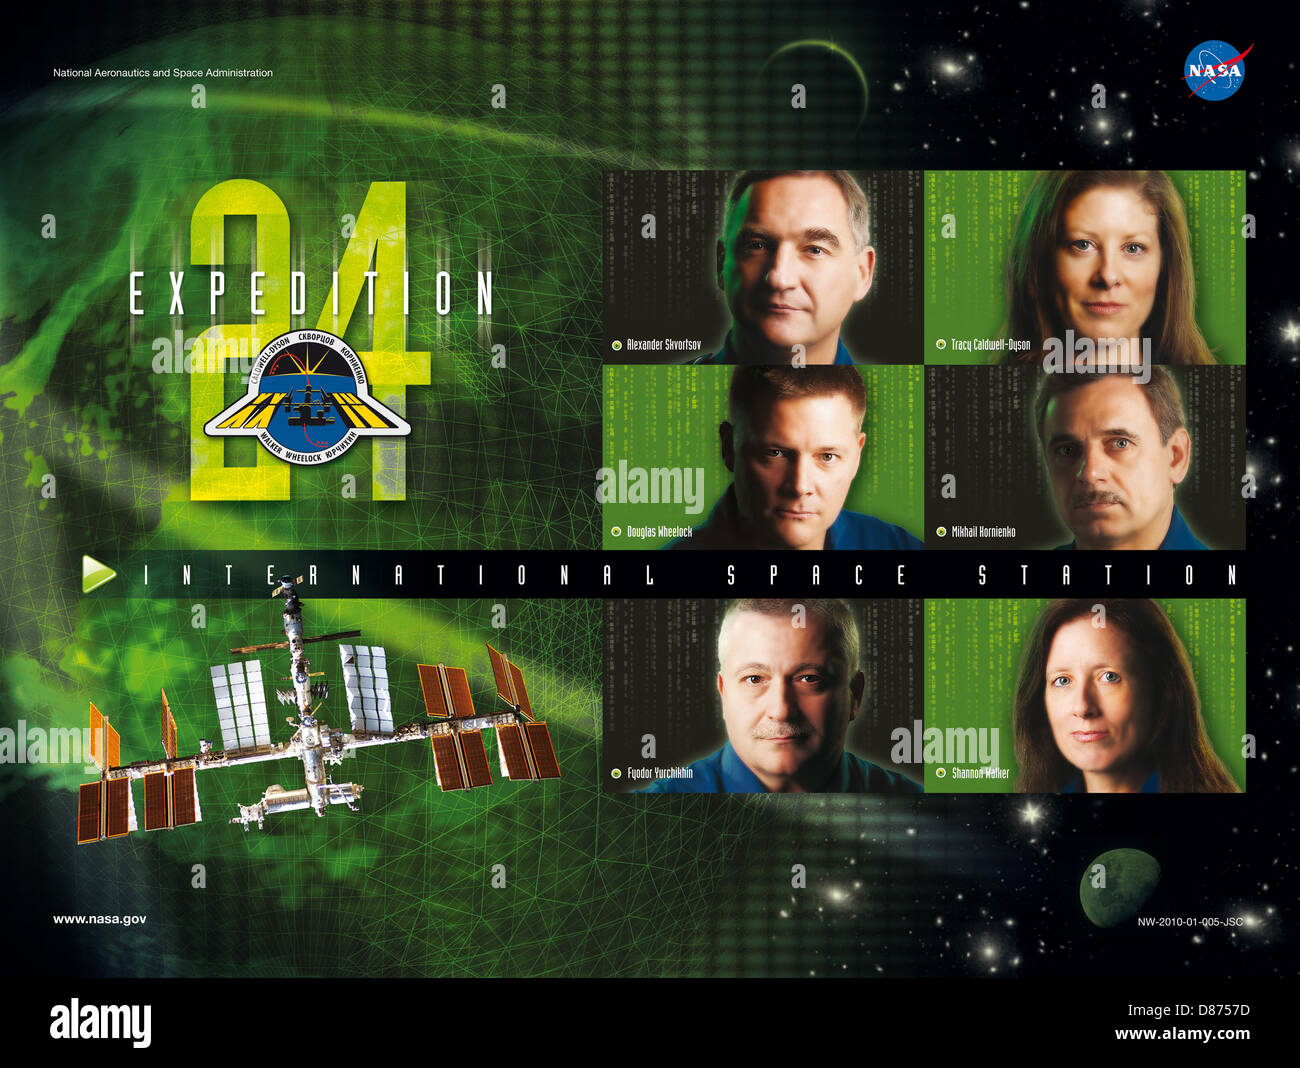 Expedition 24 Matrix crew poster.jpg Stock Photo